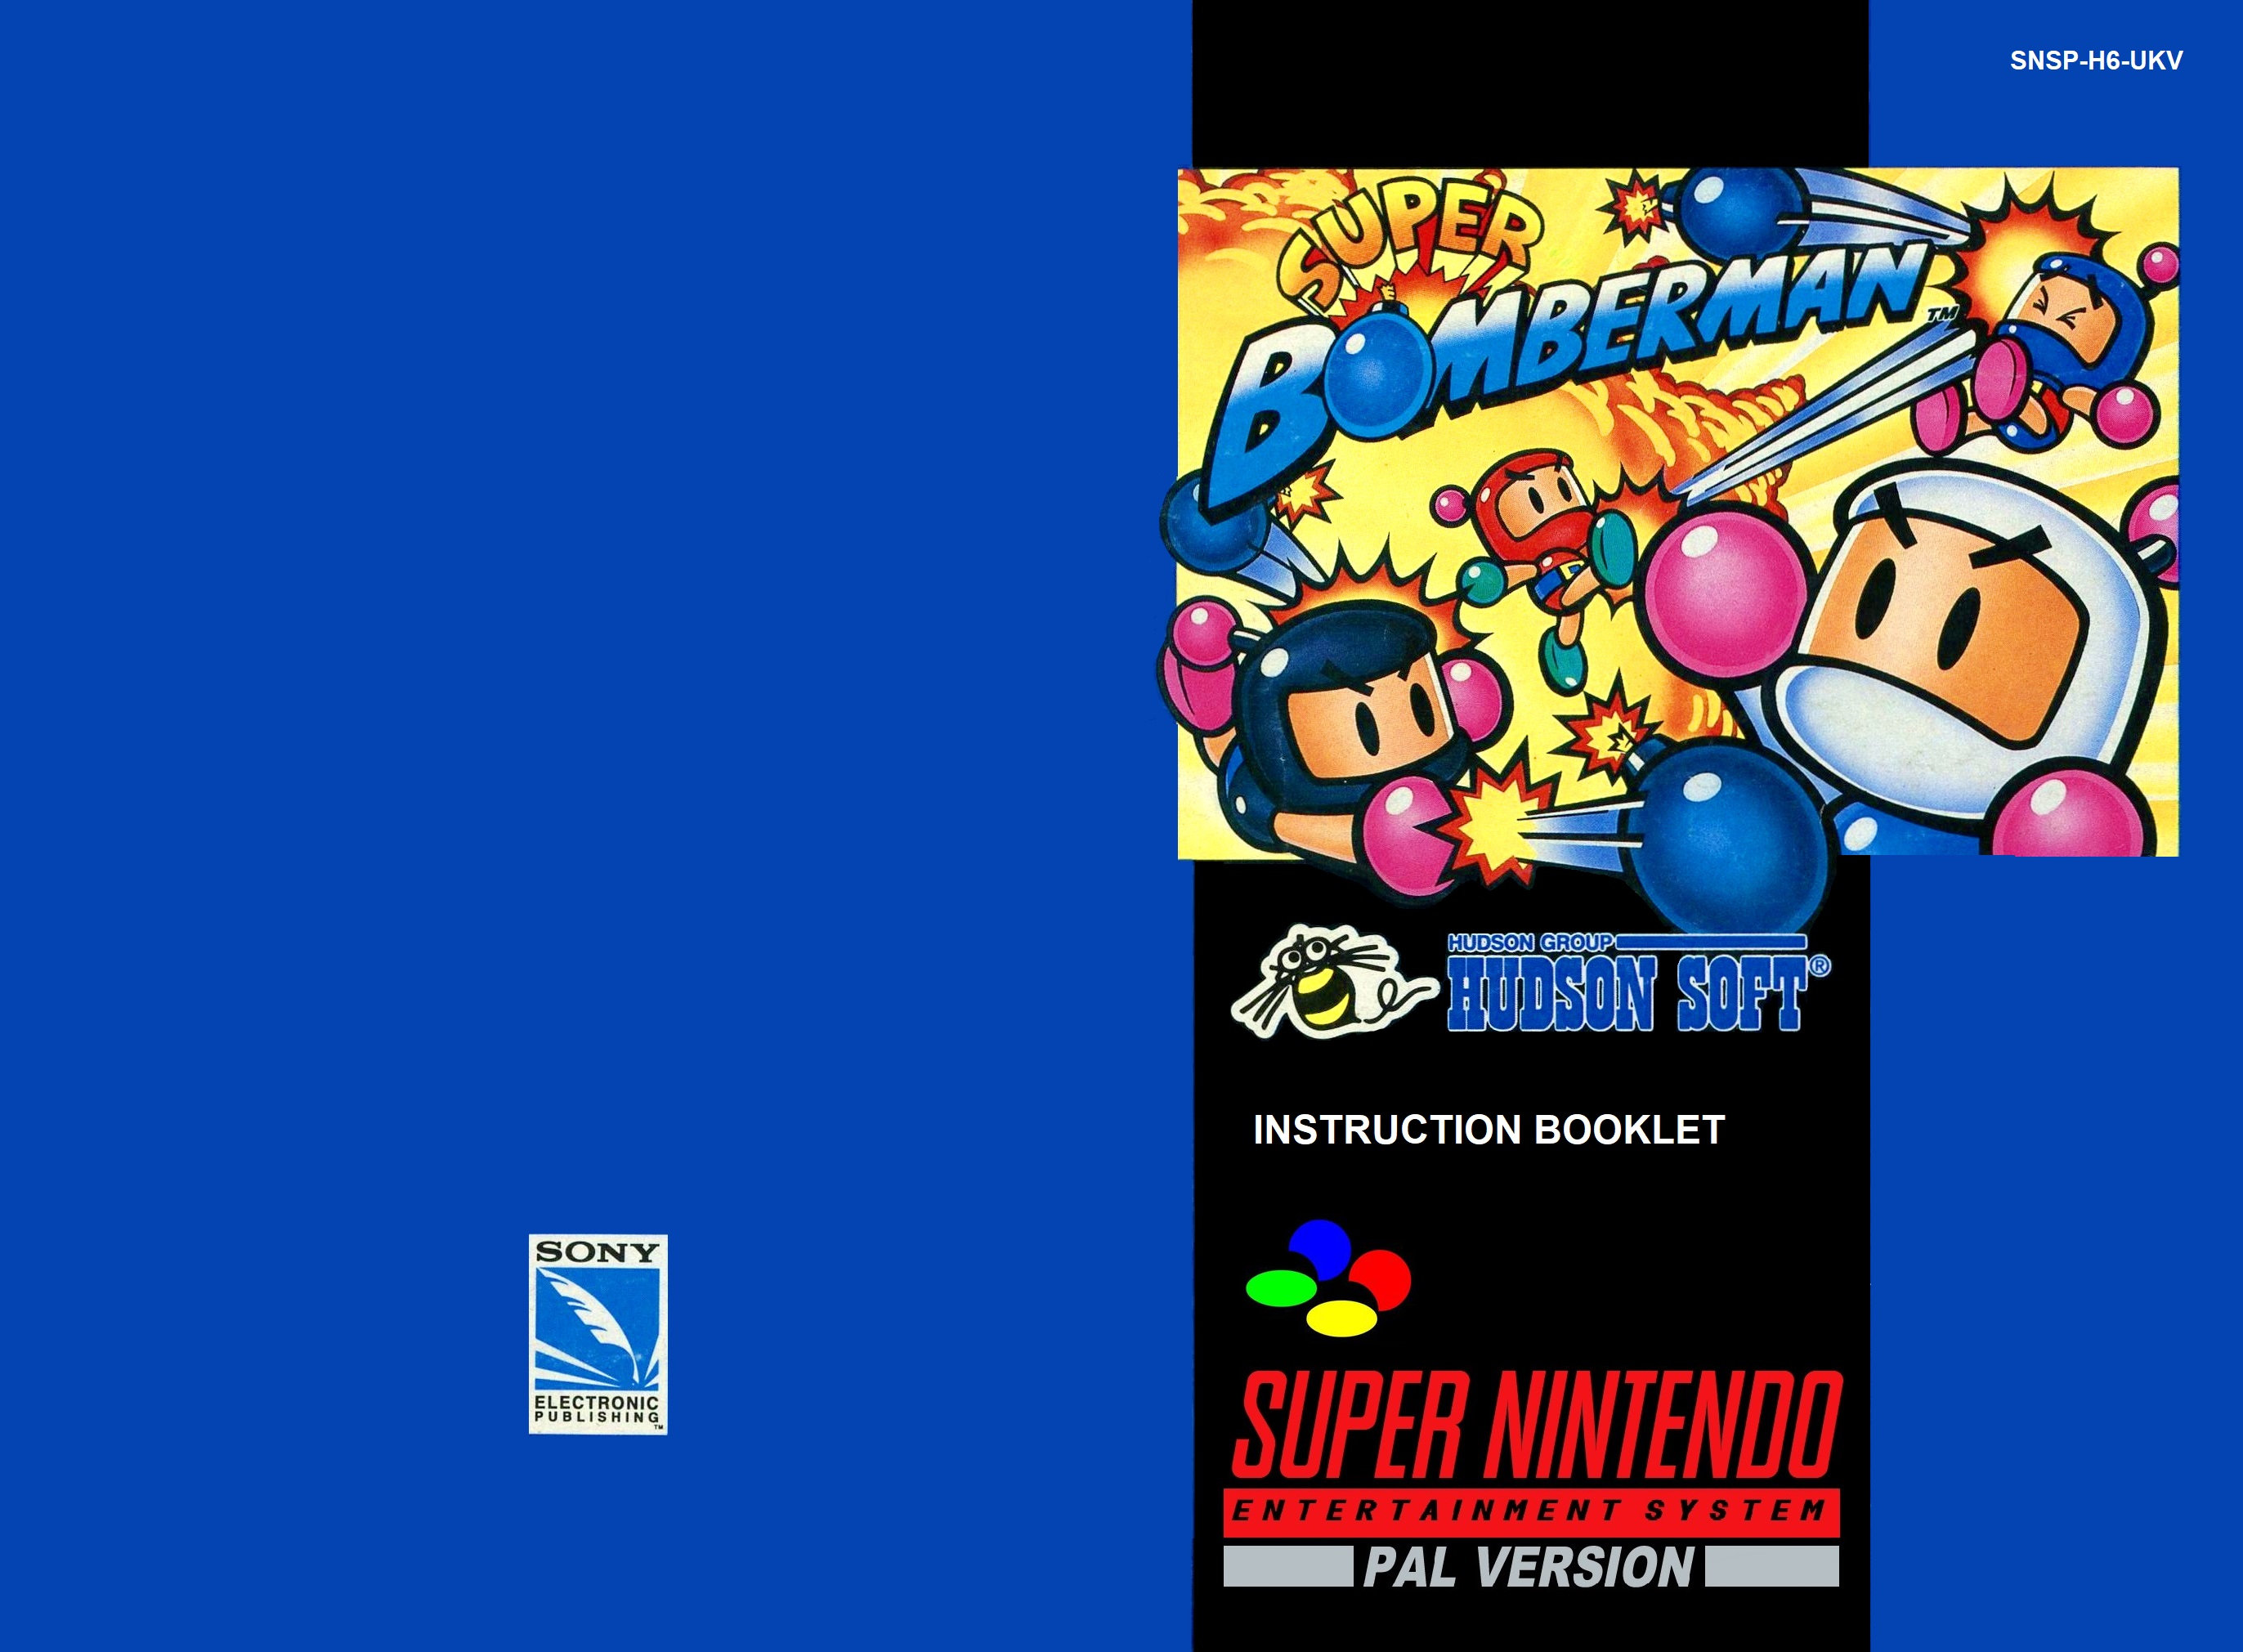 Super Bomberman 3 PAL (Super Nintendo SNES) PAL Box Only - Rare - Authentic  LOOK